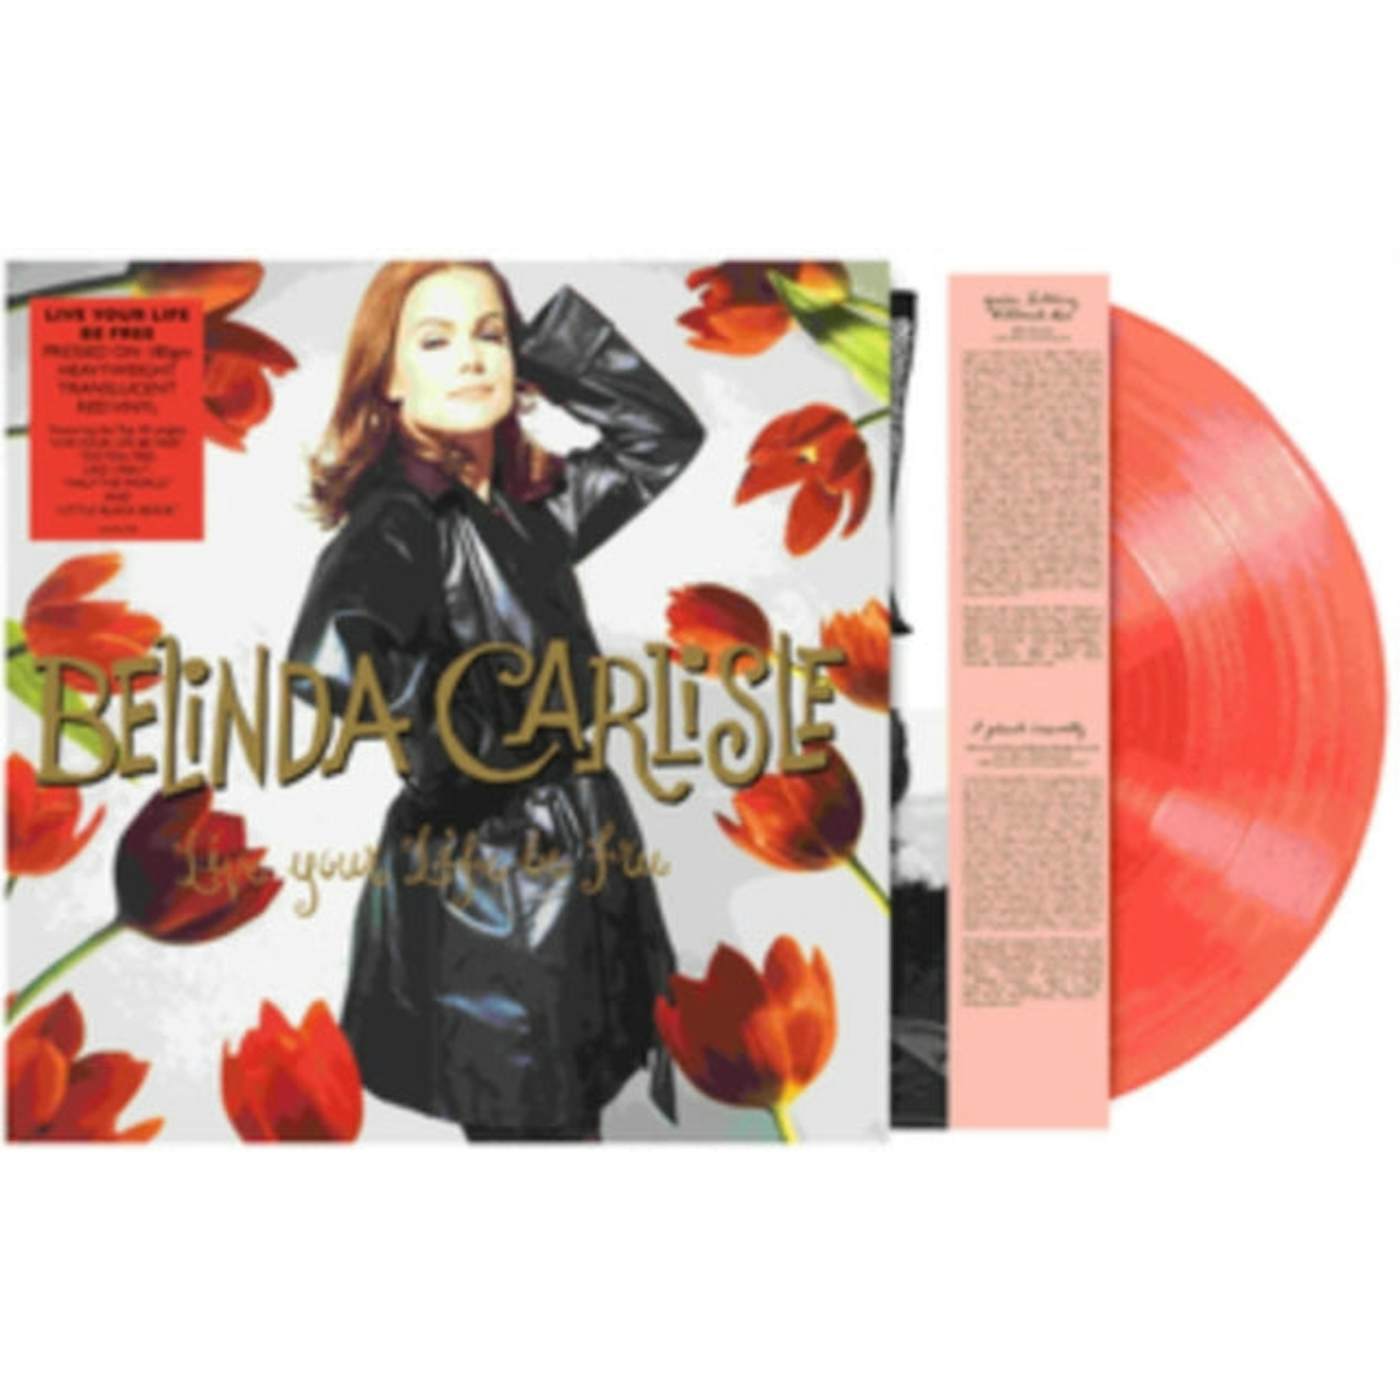 Belinda Carlisle LP Vinyl Record - Live Your Life Be Free (Coloured Vinyl)